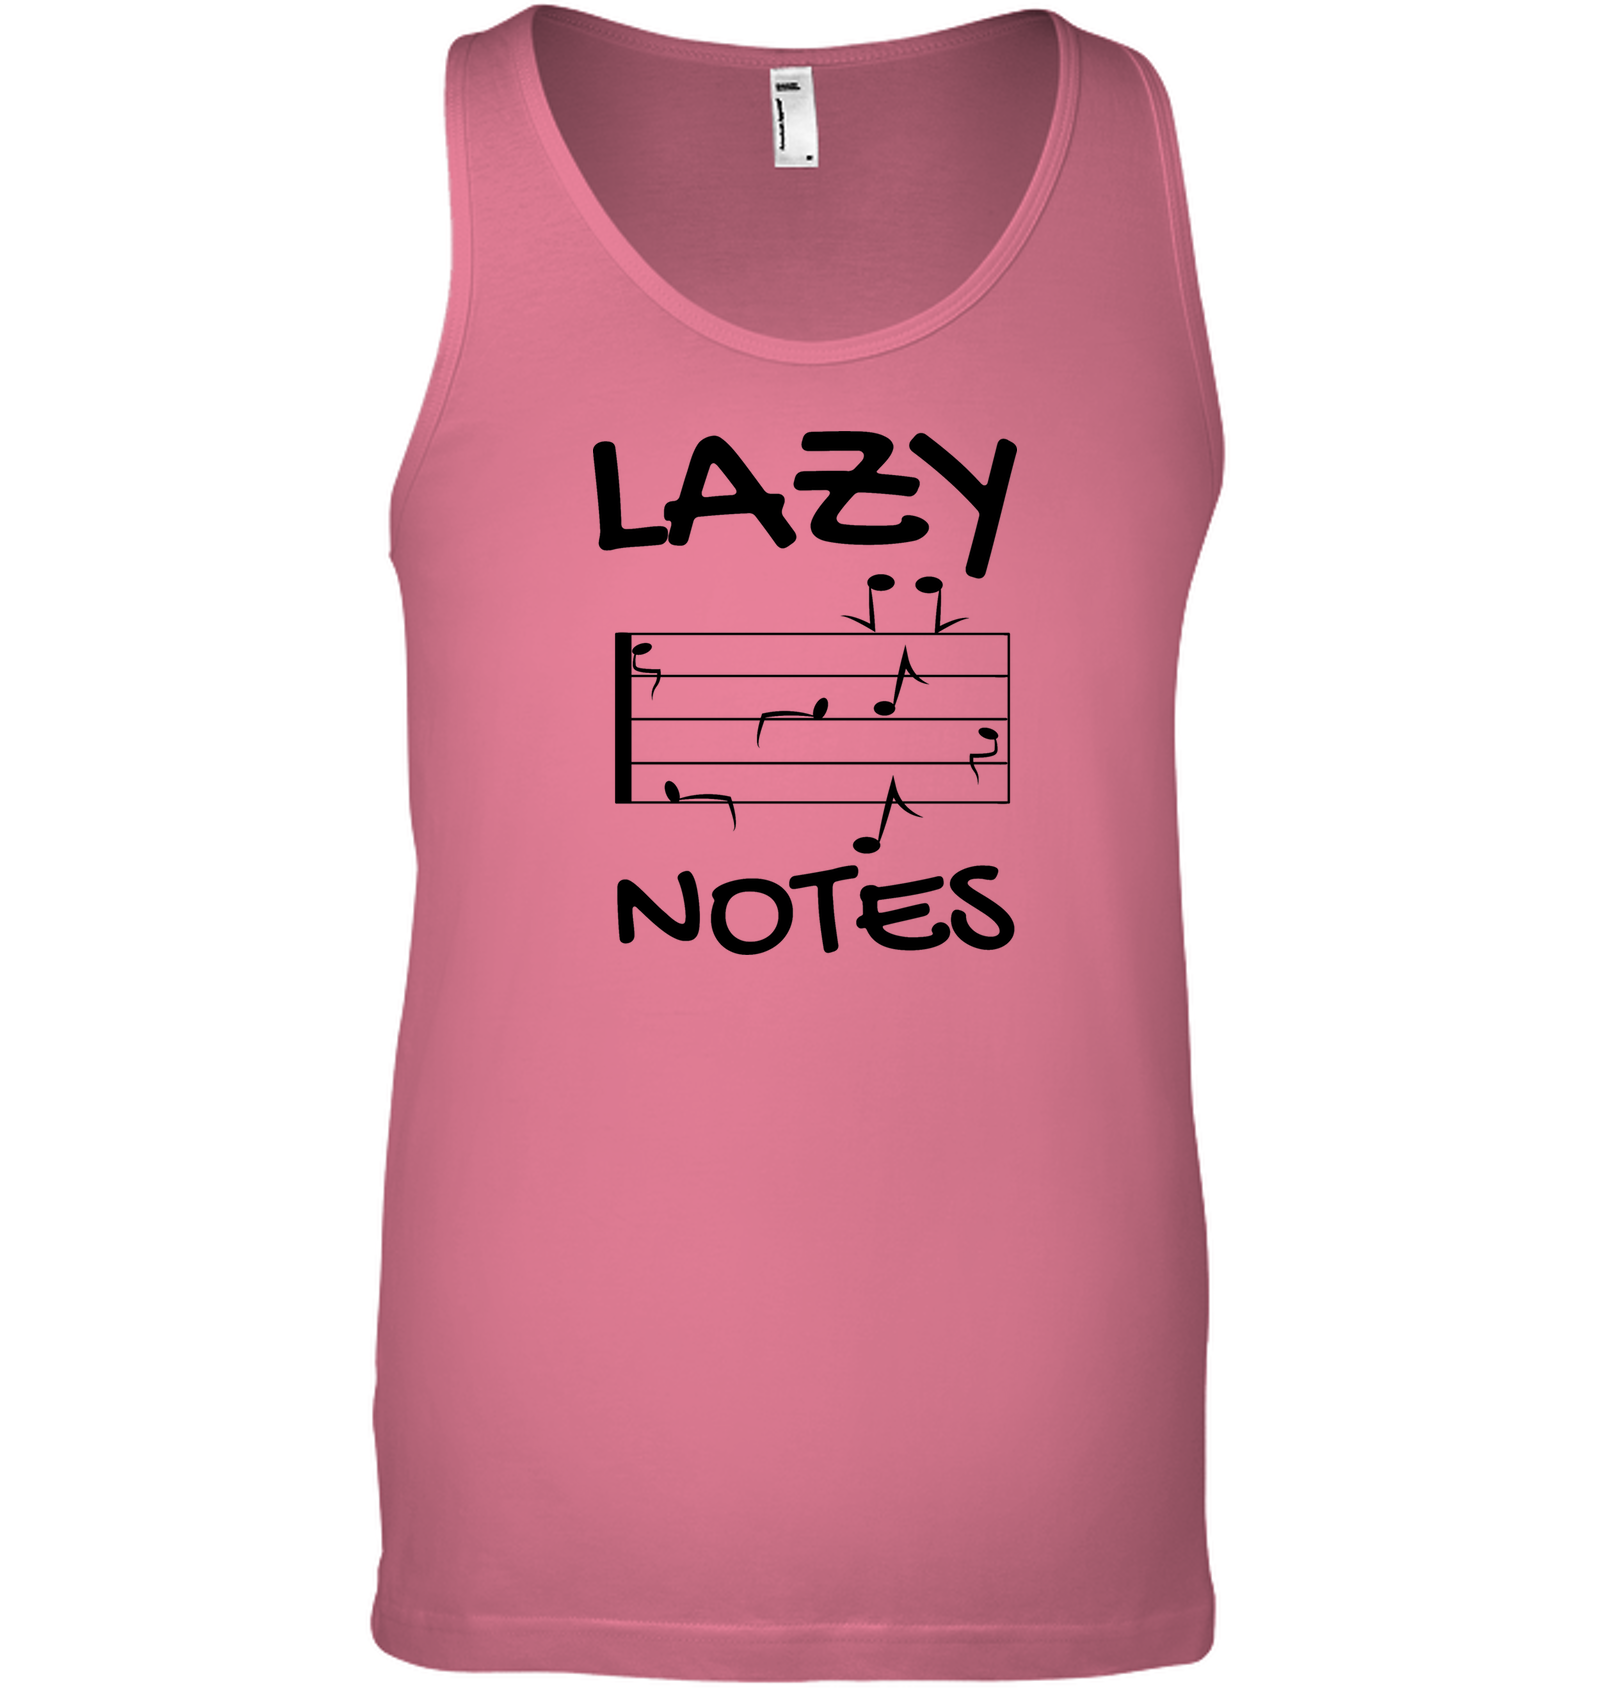 Lazy Notes (Black) - Bella + Canvas Unisex Jersey Tank